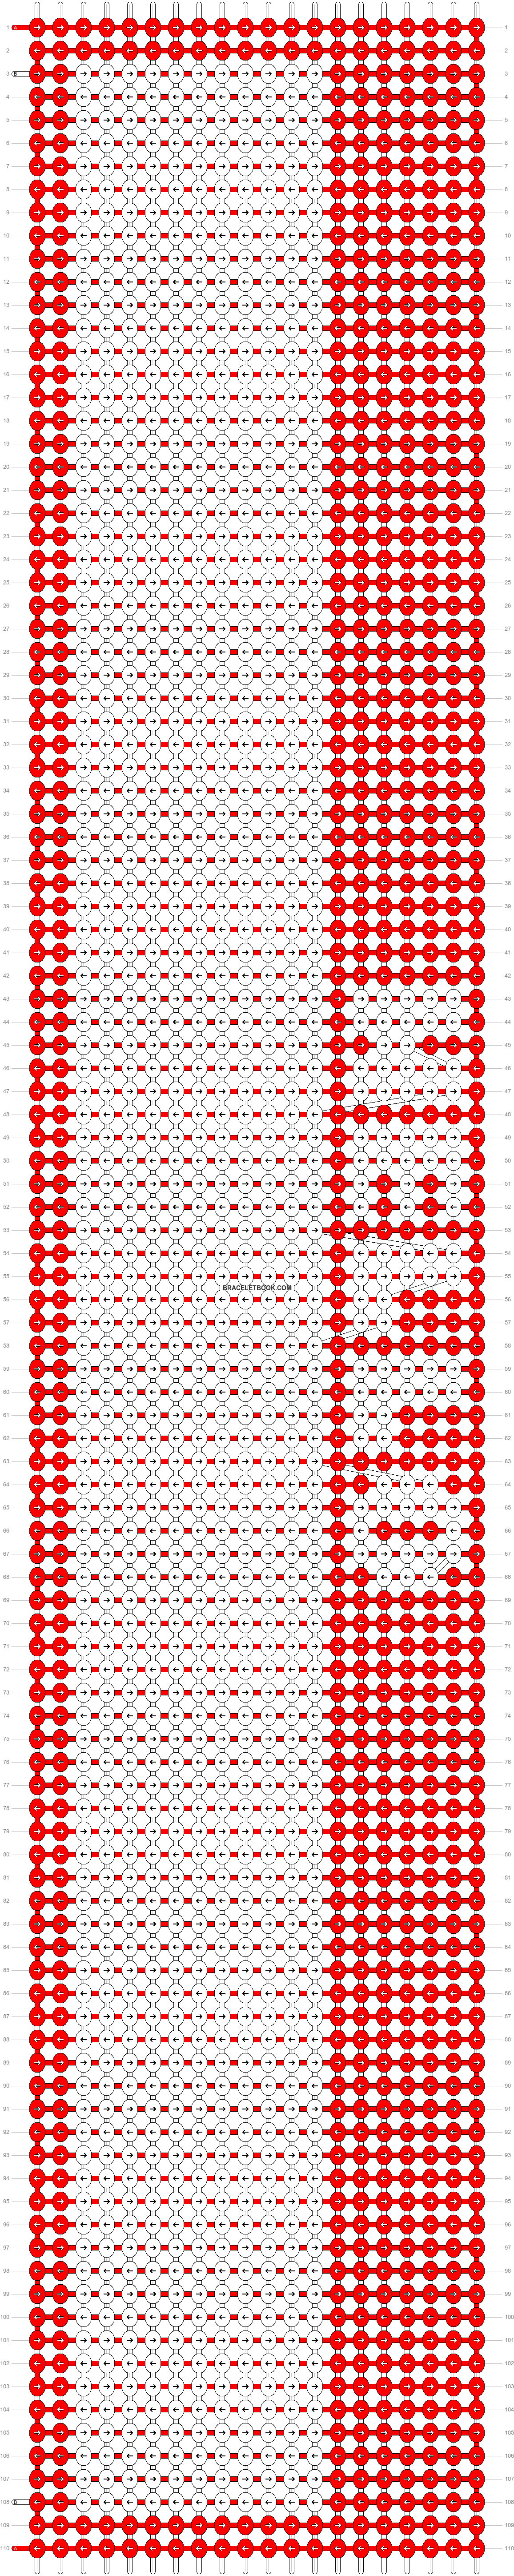 Alpha pattern #8793 pattern